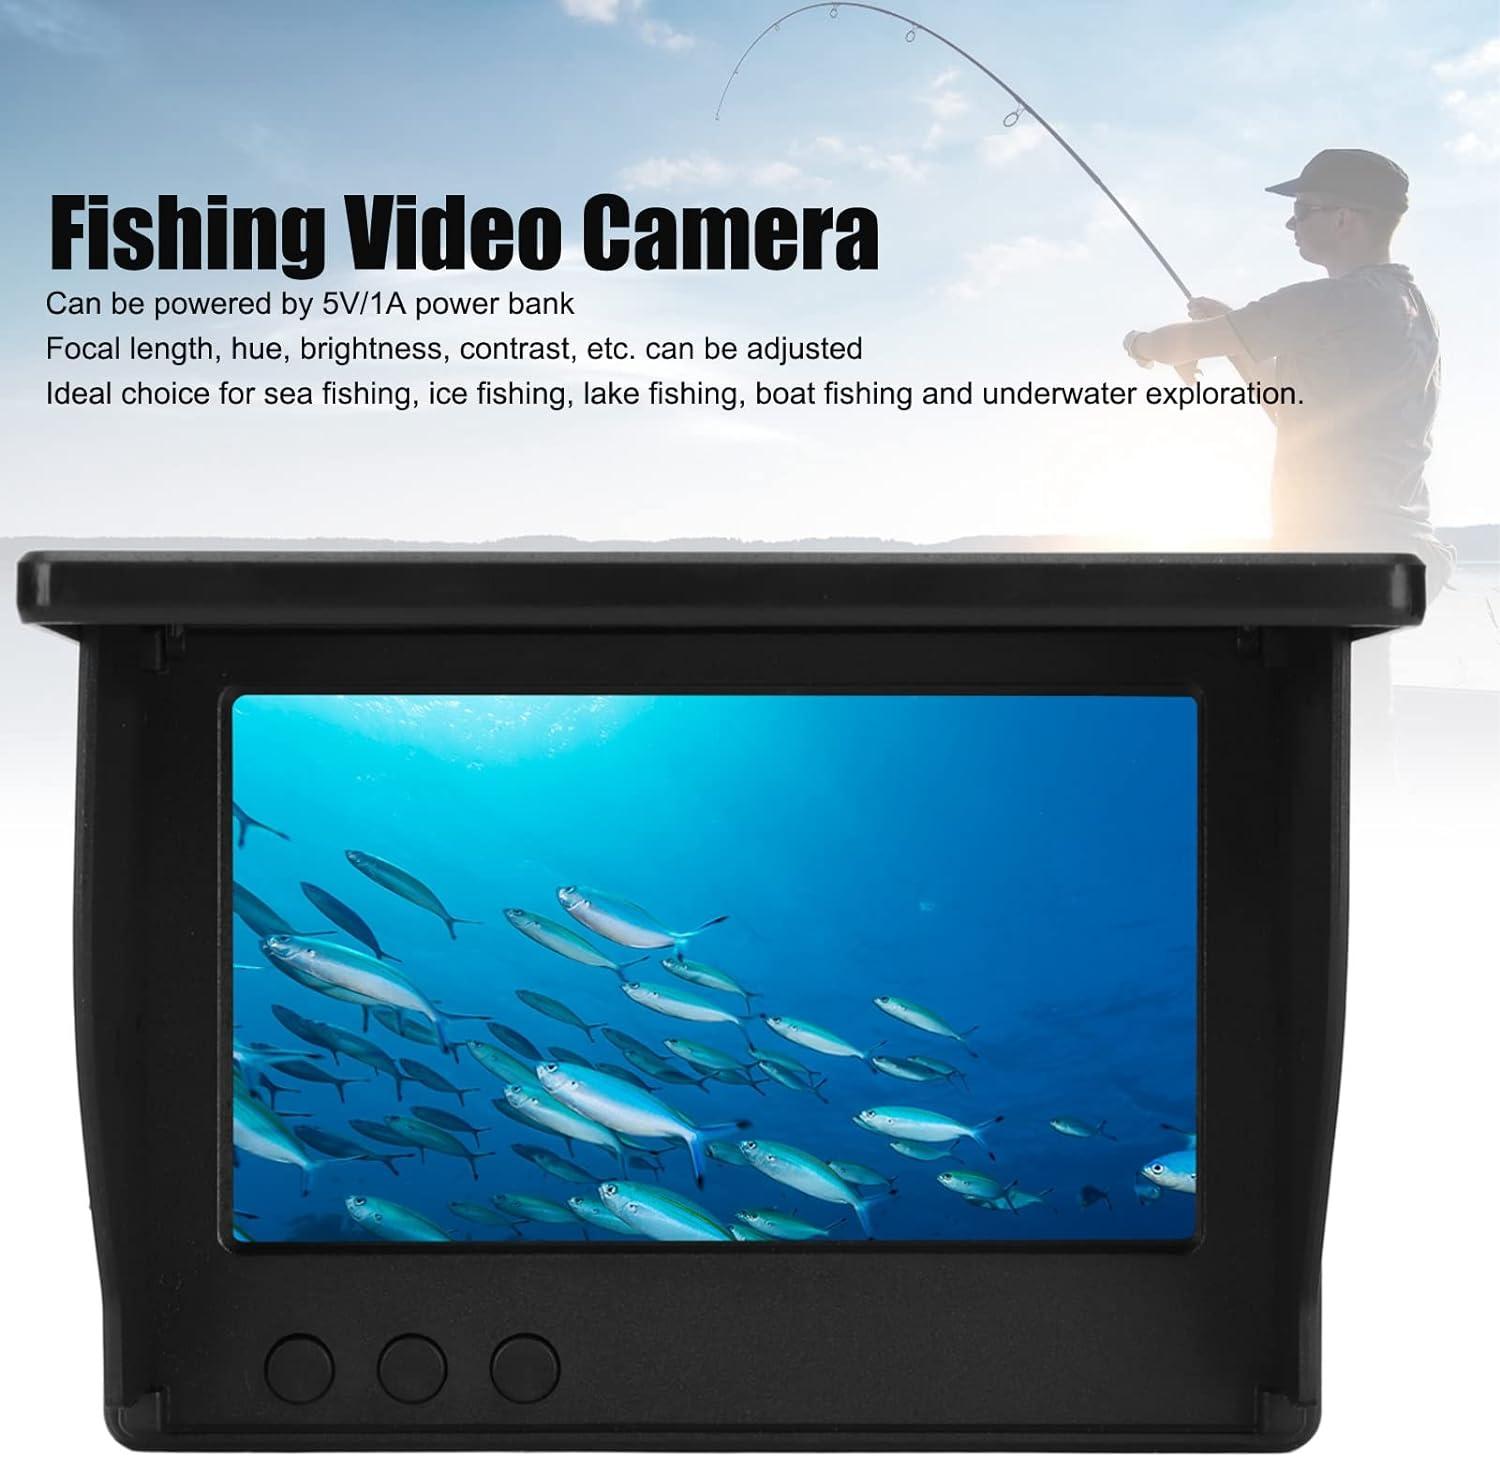 Underwater Fishing Camera Portable Video Fish Finder Underwater Fishing  Camera Kit with 4.3in LCD Monitor IP67 Deep Waterproof for Sea Ice Lake  Boat Fishing